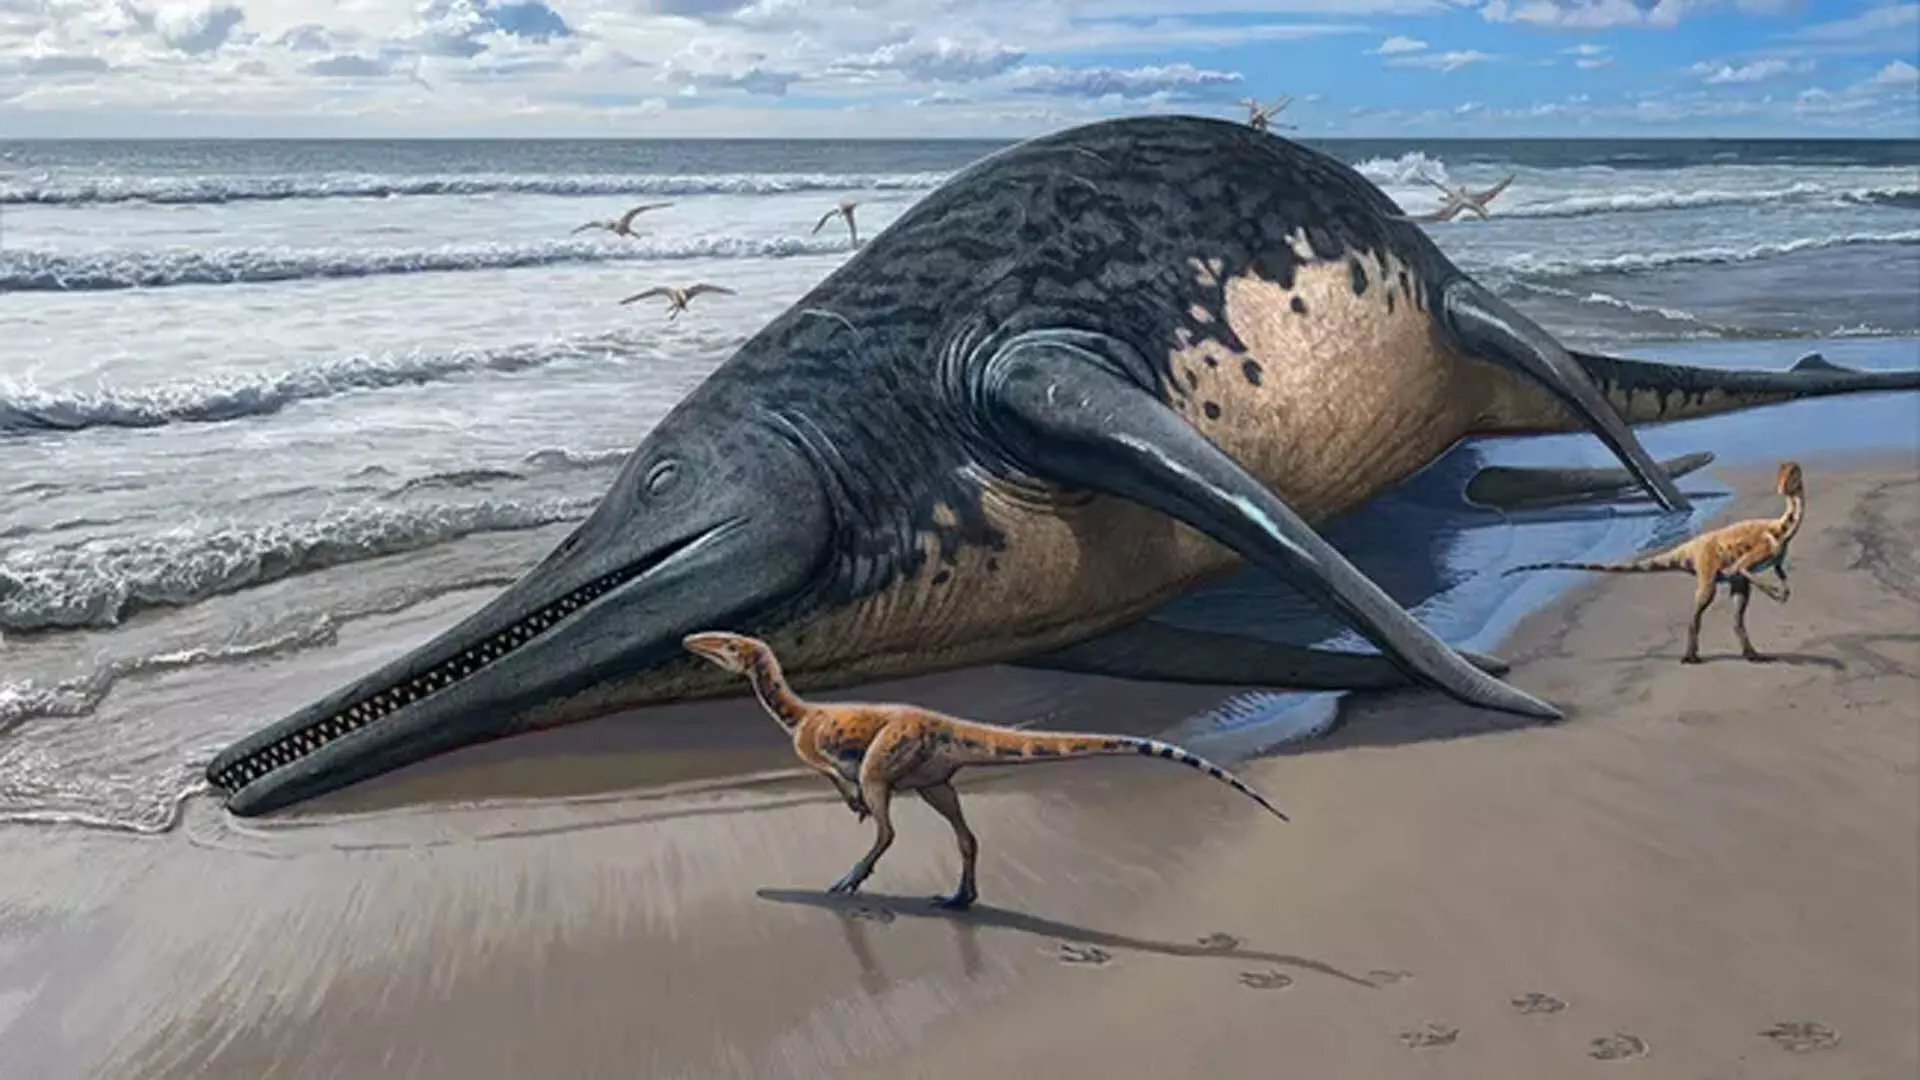 समुद्र तट पर खोजी गई 82 फुट की विशाल छिपकली मछली अब तक पाई गई सबसे बड़ी समुद्री सरीसृप